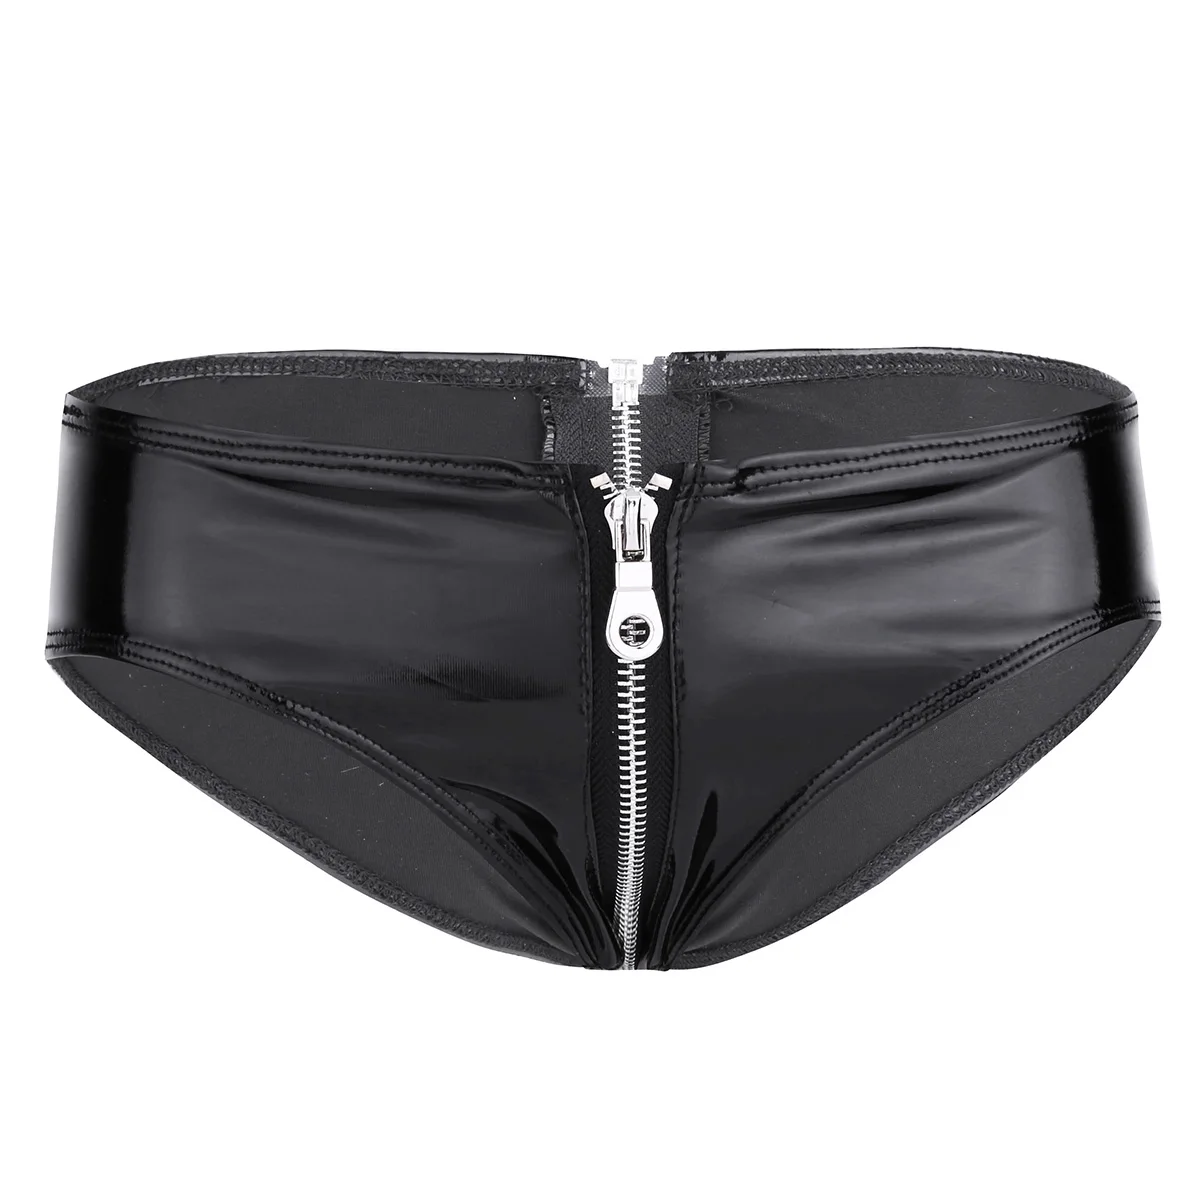 Black Womens Patent Leather Zipper Crotch Lingerie Shiny Low Rise Bikini Briefs Underwear